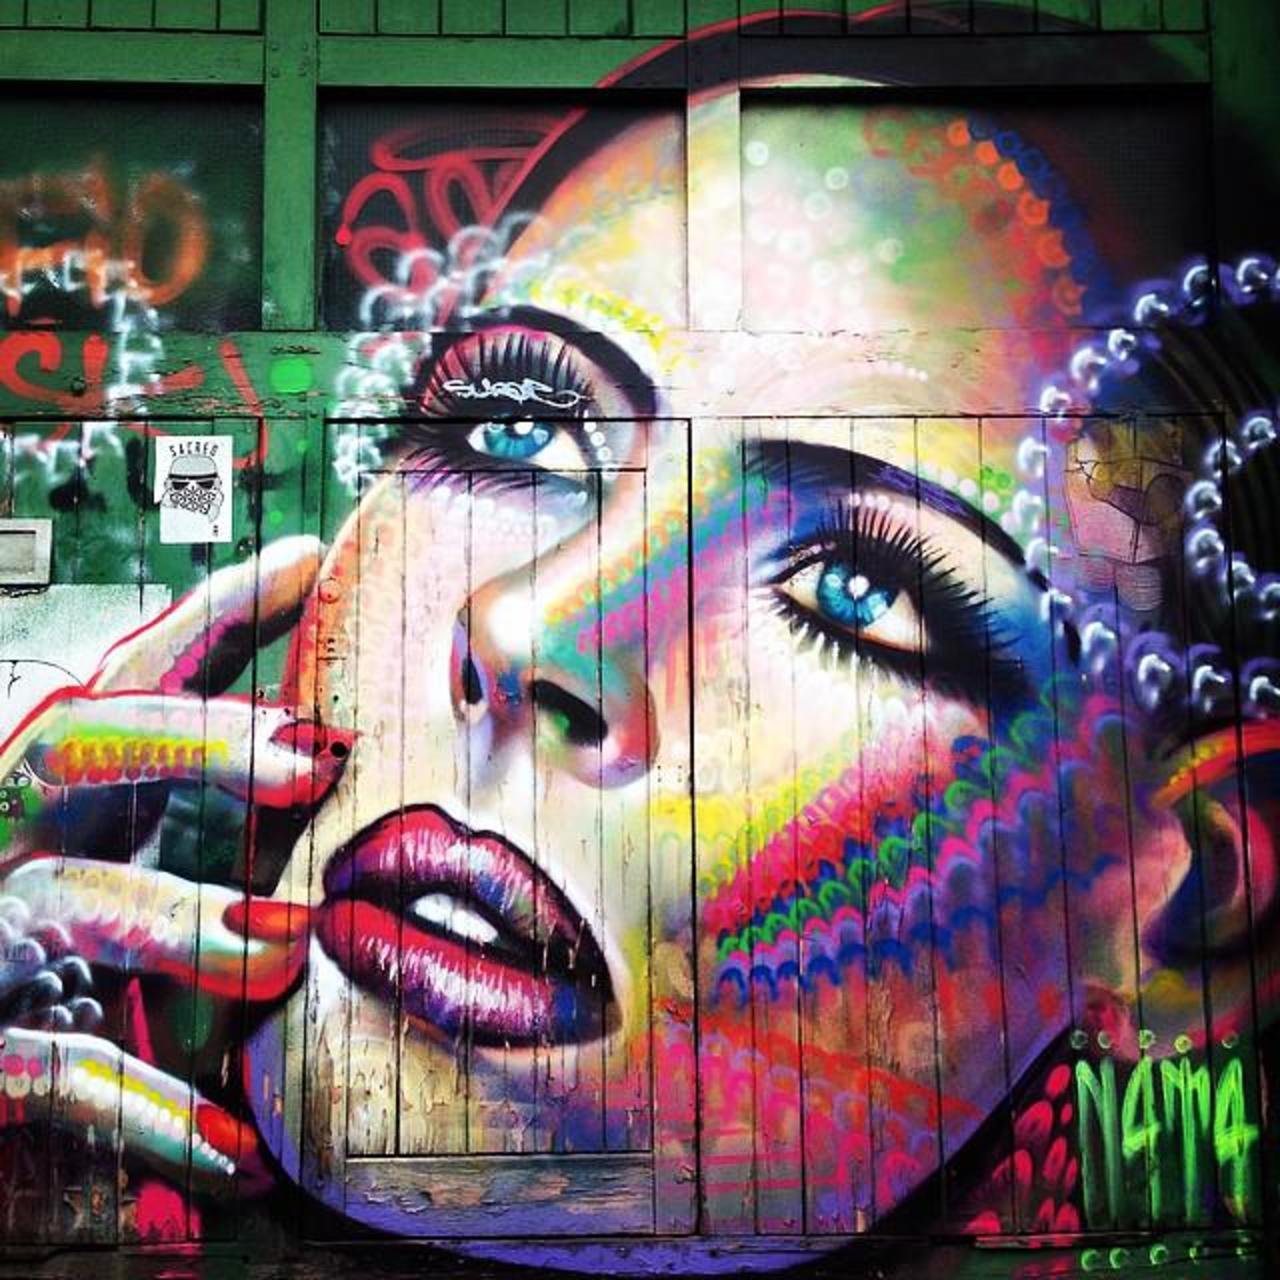 #GraffSpotting #PhotoGraff #Instagram #graffiti #artwork #streetart #birmingham #digbeth by leminh78 http://t.co/J0OHCBj1vd